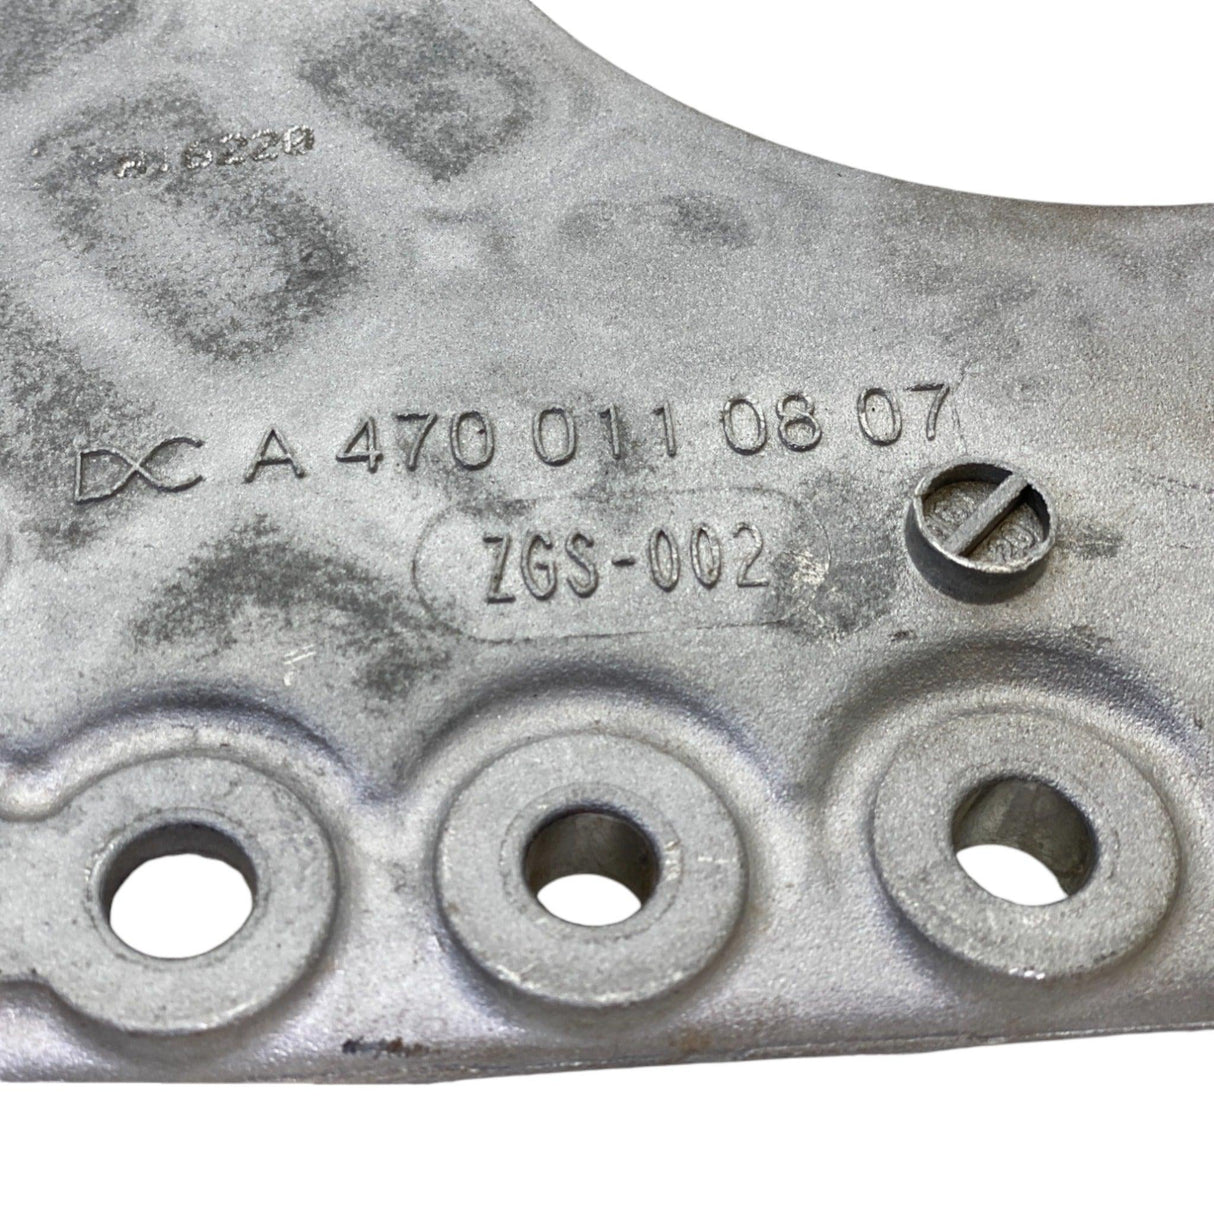 A4700111007 Genuine Detroit Diesel Crank Case Cover For Dd15.